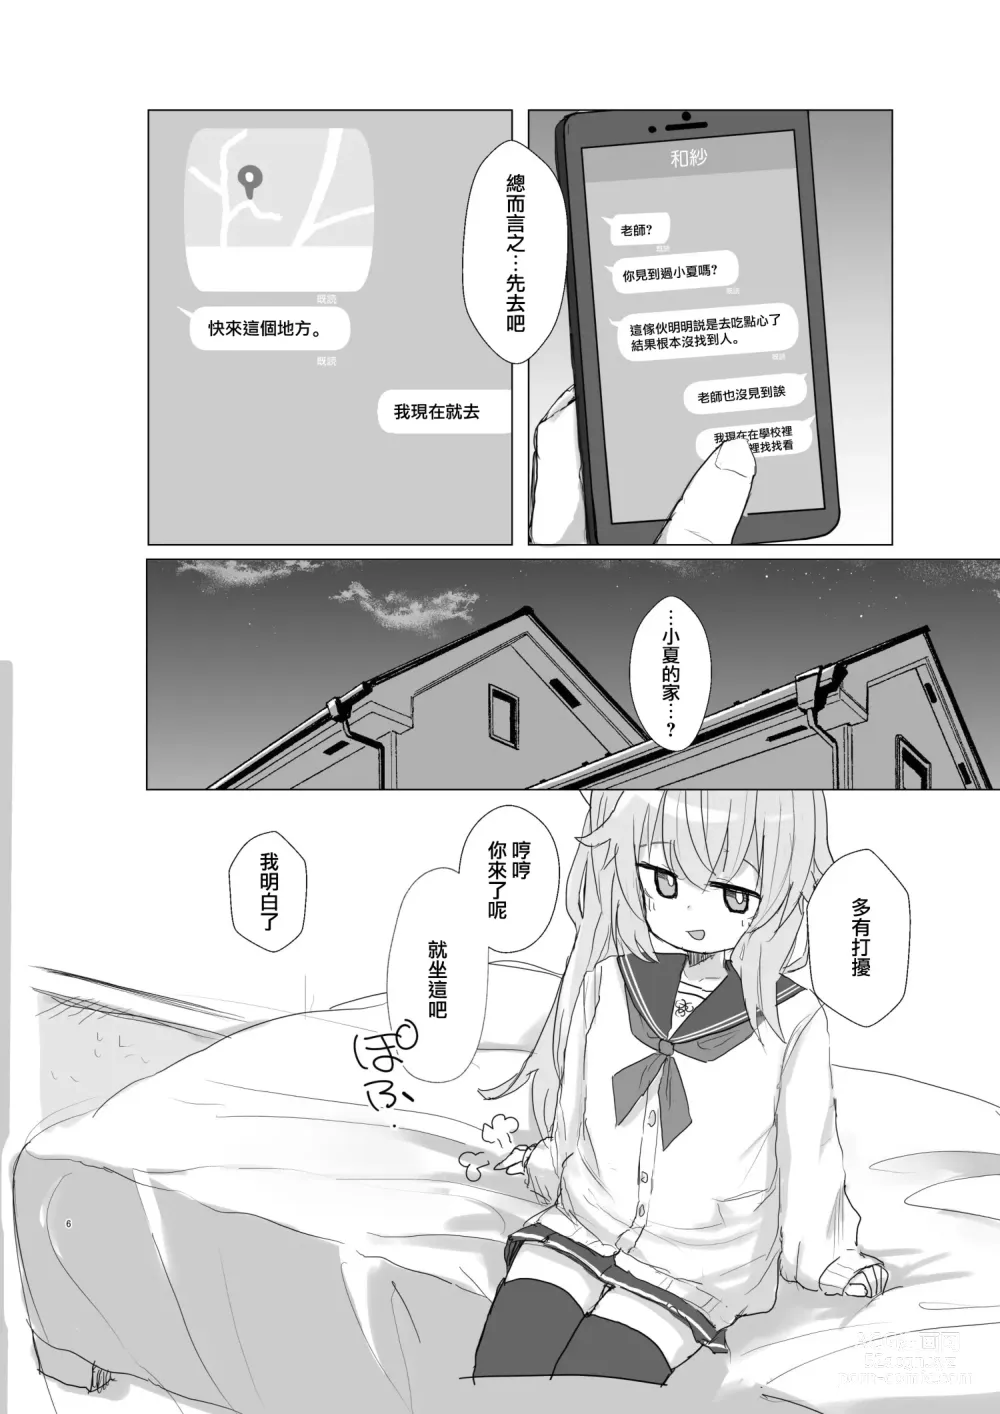 Page 8 of doujinshi 無論怎樣悲傷只要有甜點就足以緩和。